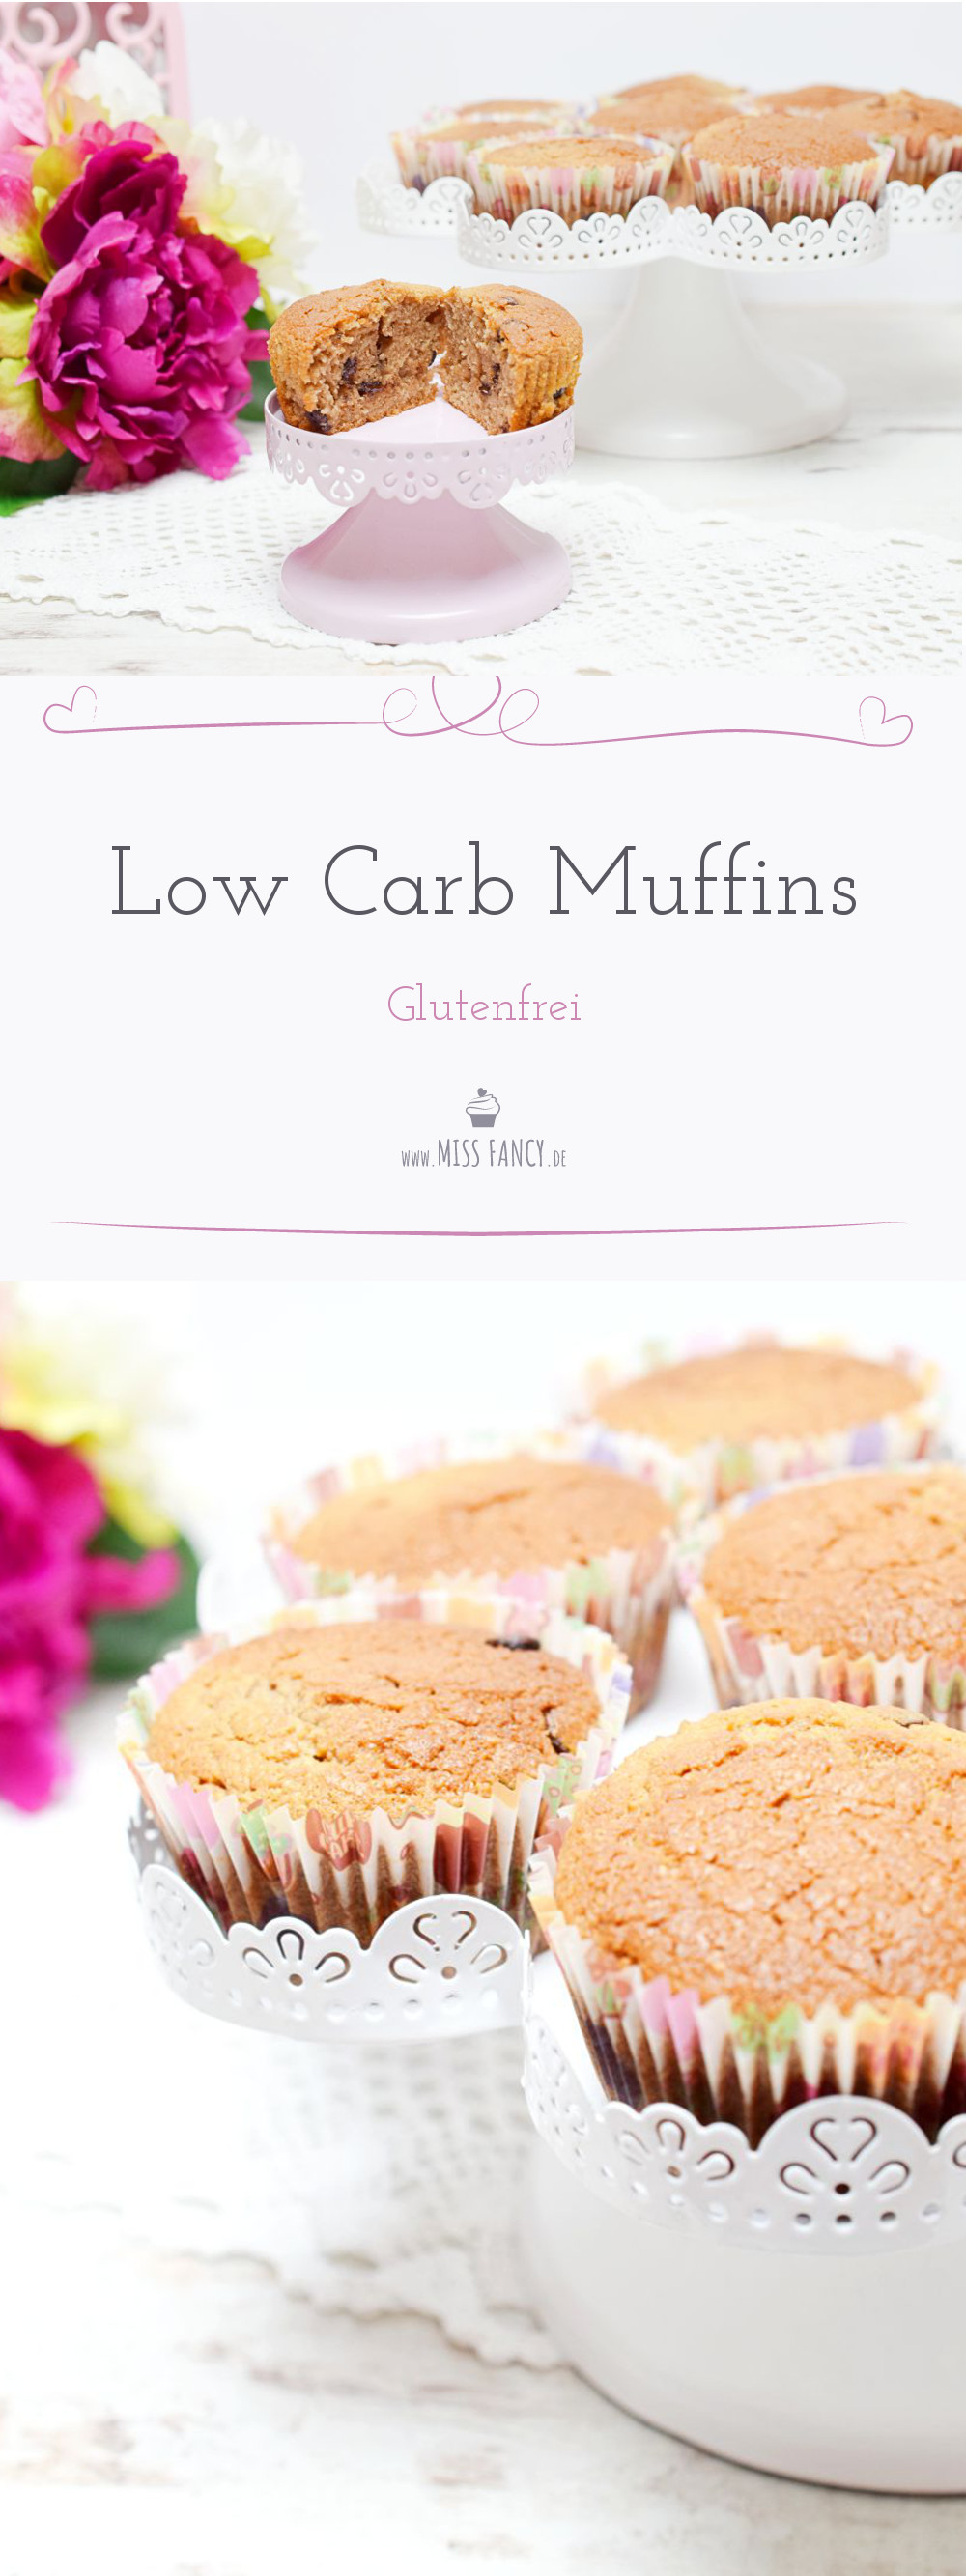 Low Carb Muffins - Glutenfrei